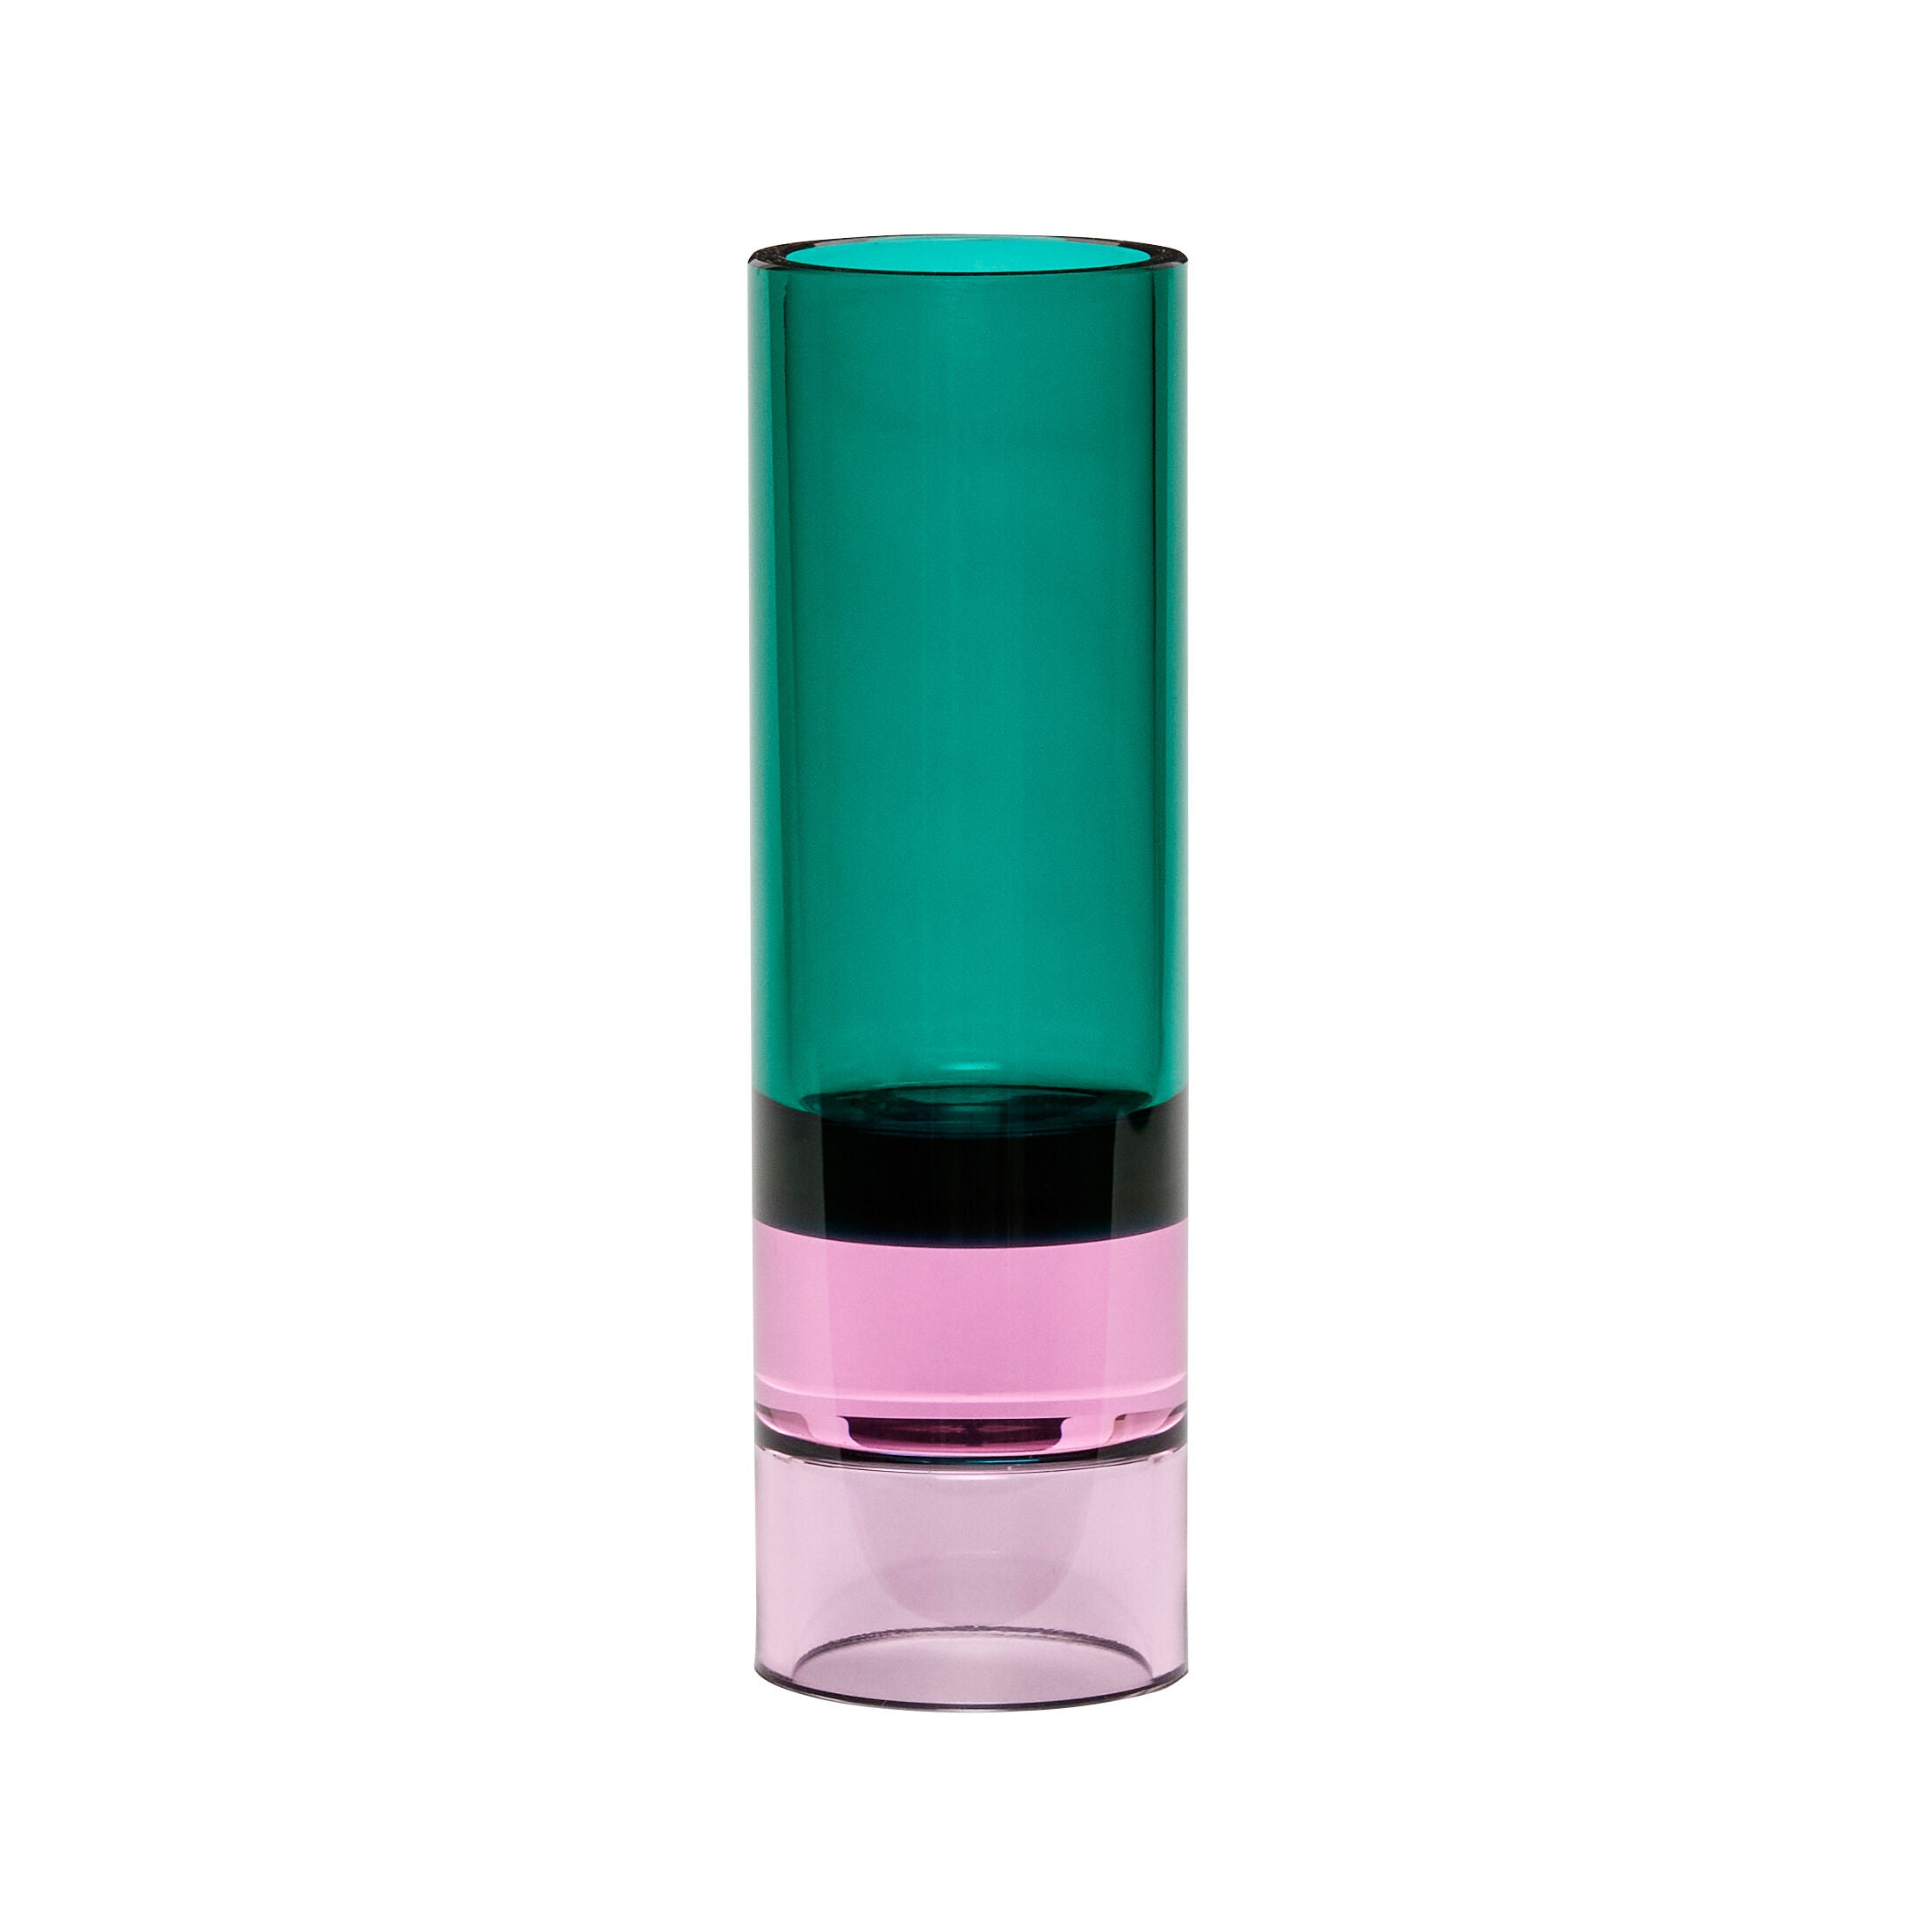 Astro Tealight Holder Green/Pink